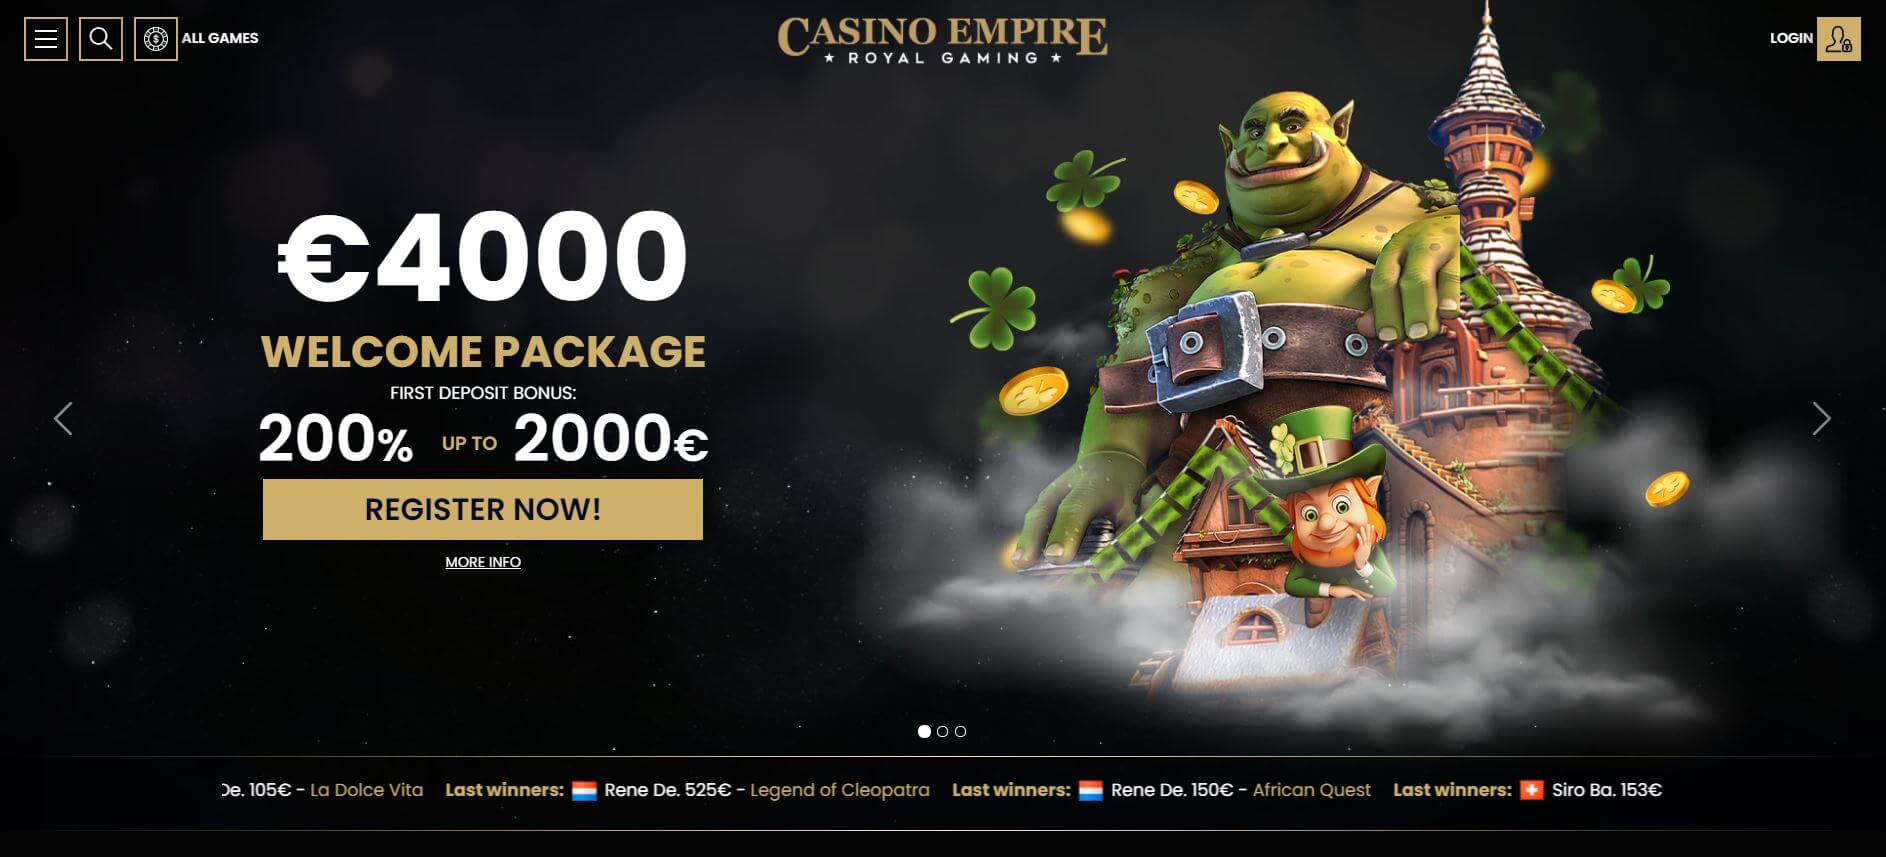 Casino Empire Homepage